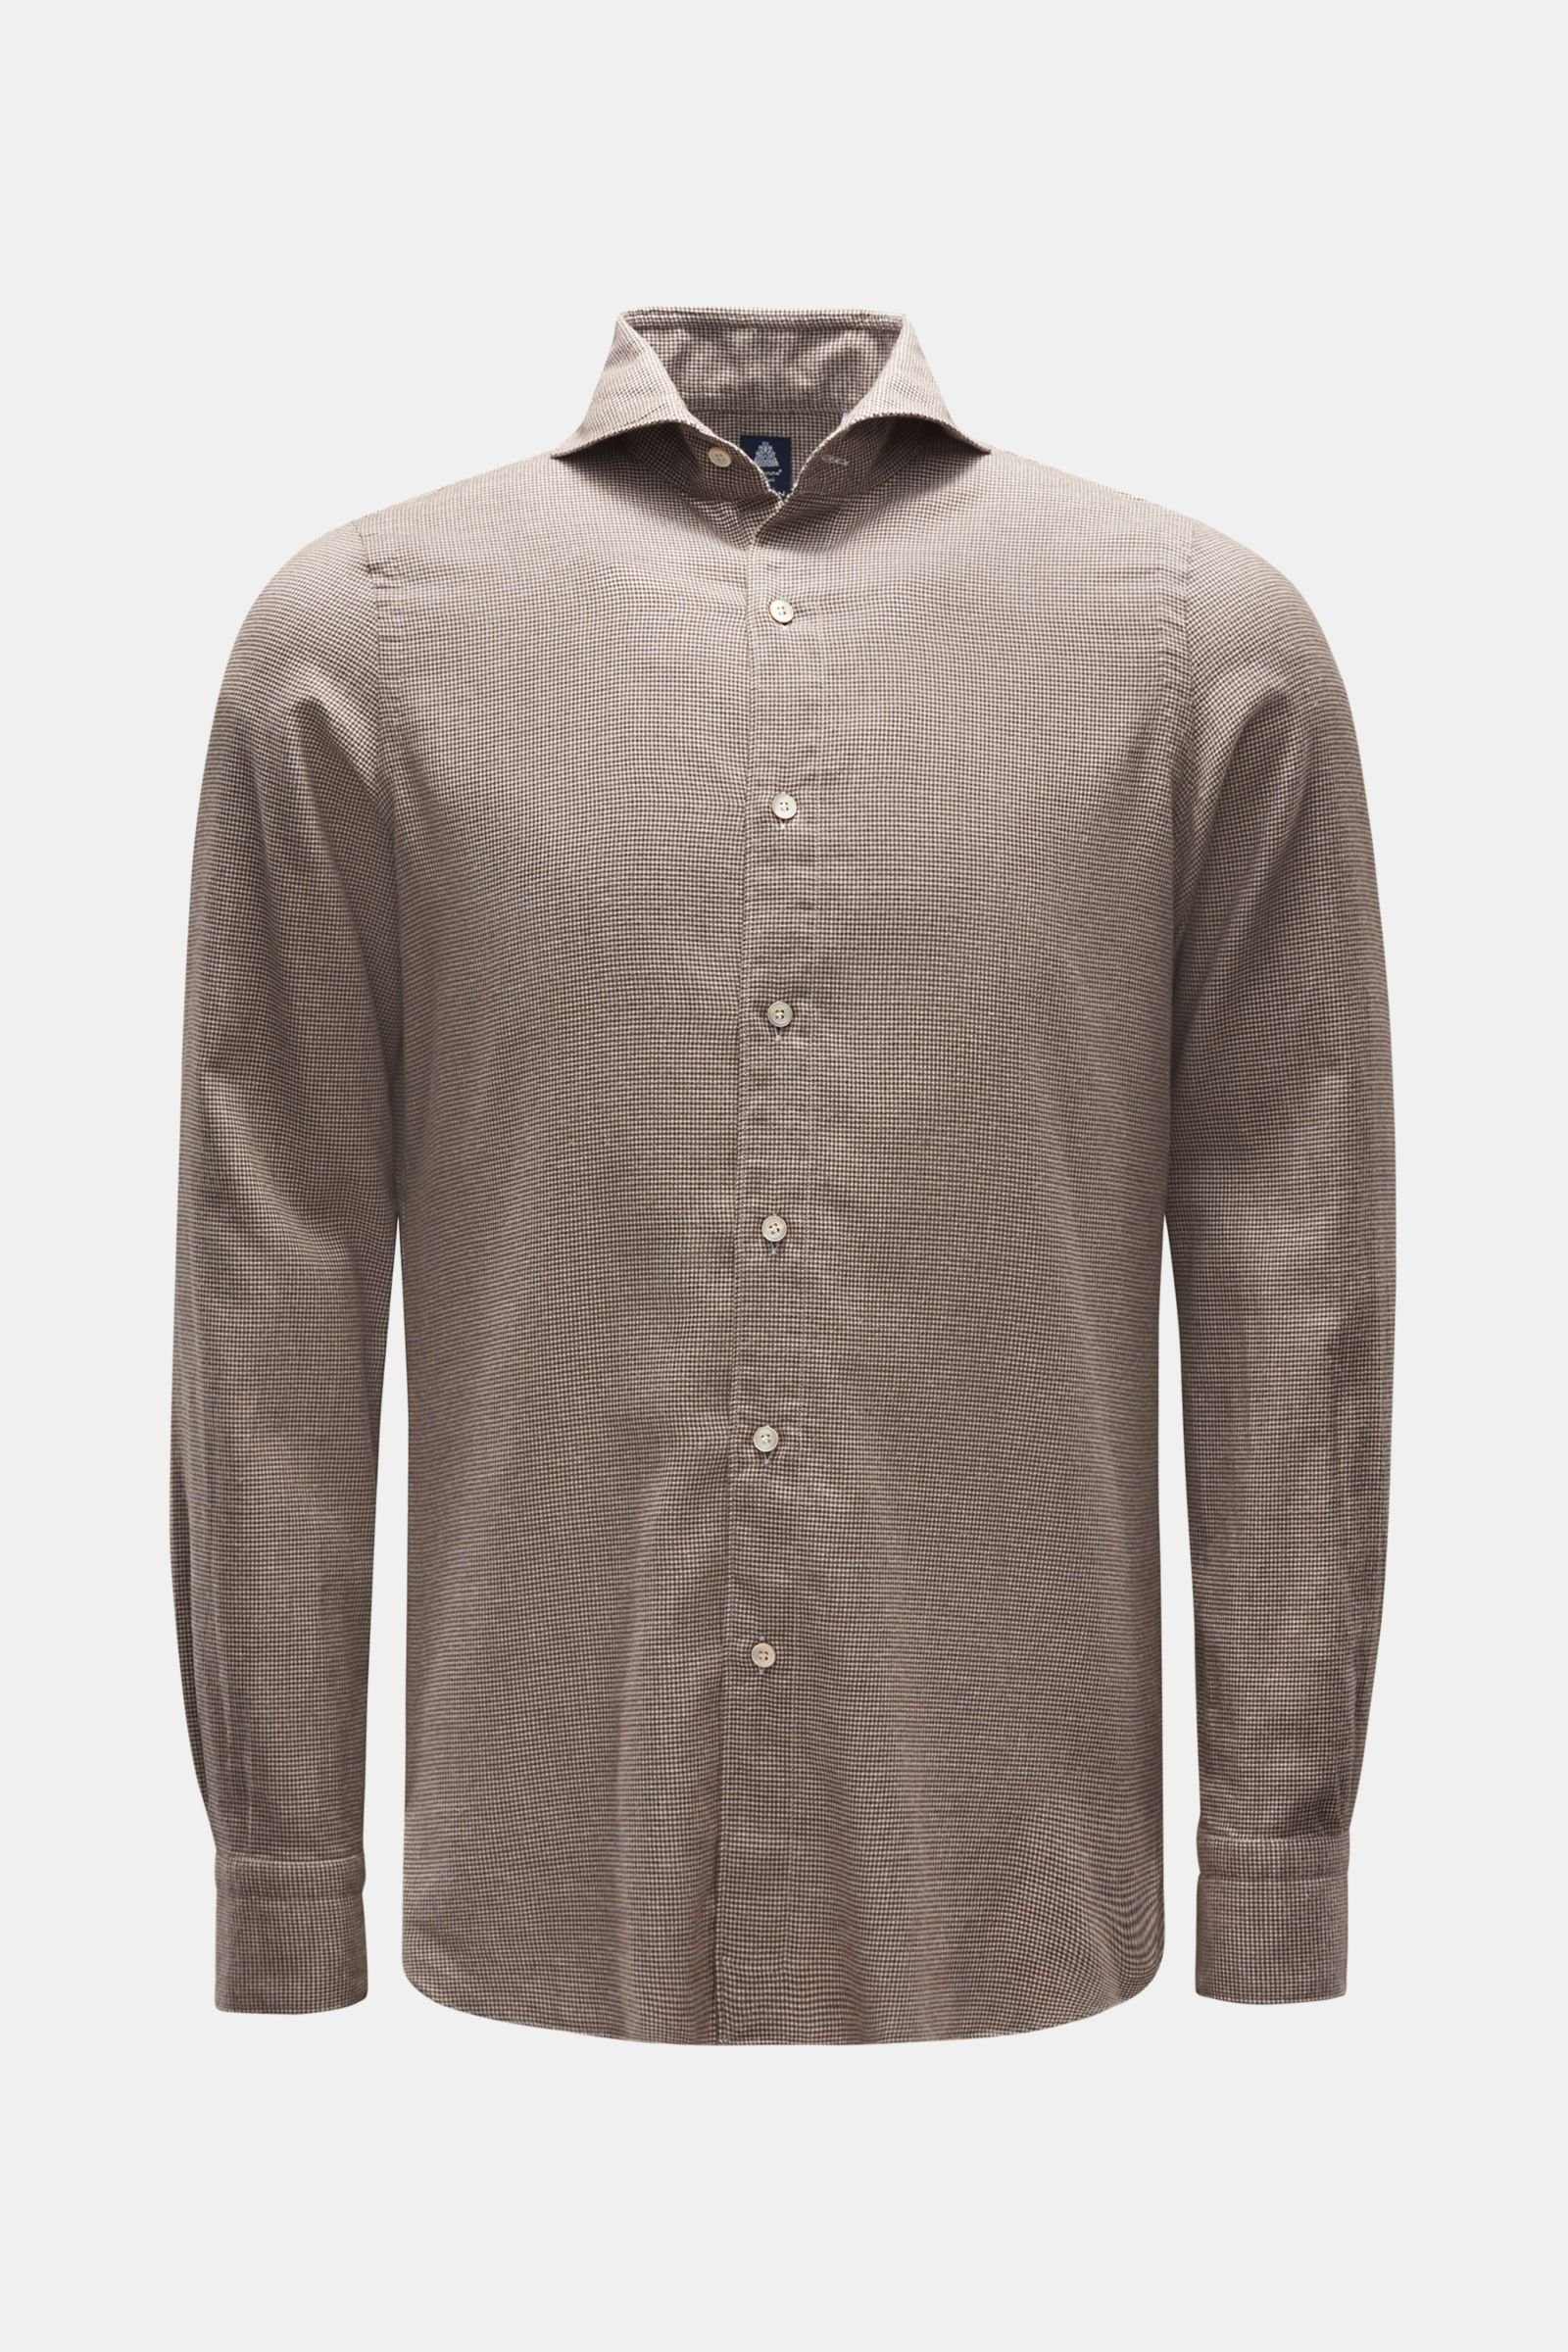 Flannel shirt 'Sergio Gaeta' shark collar dark brown/white checked